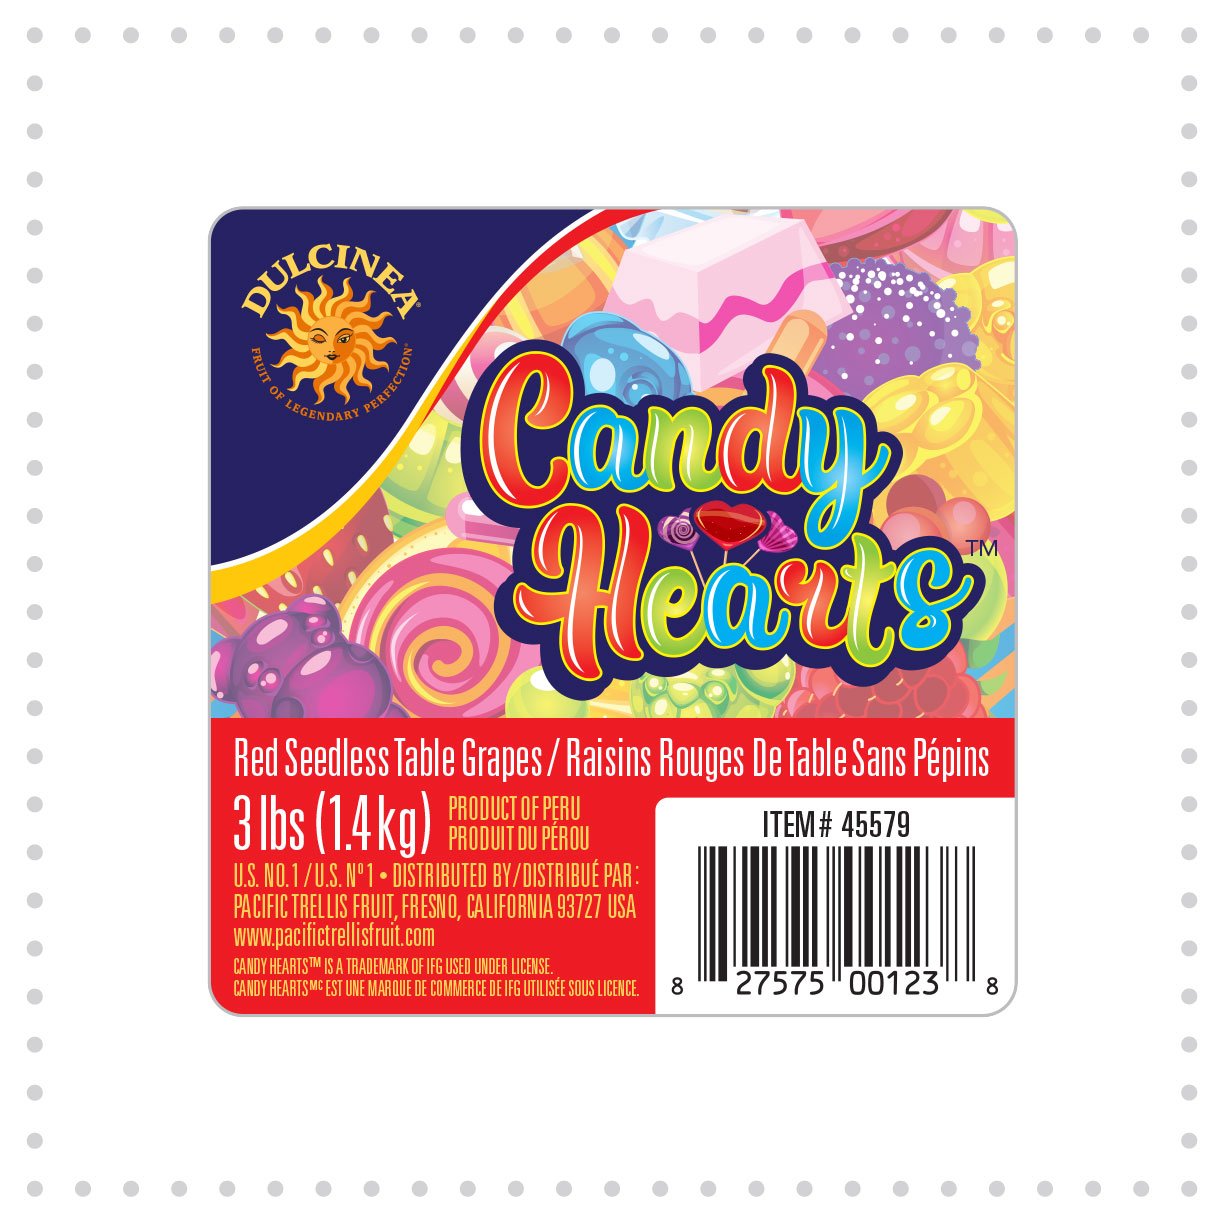 Ball-LabelDesign-CandyCart-CandyHearts.jpg